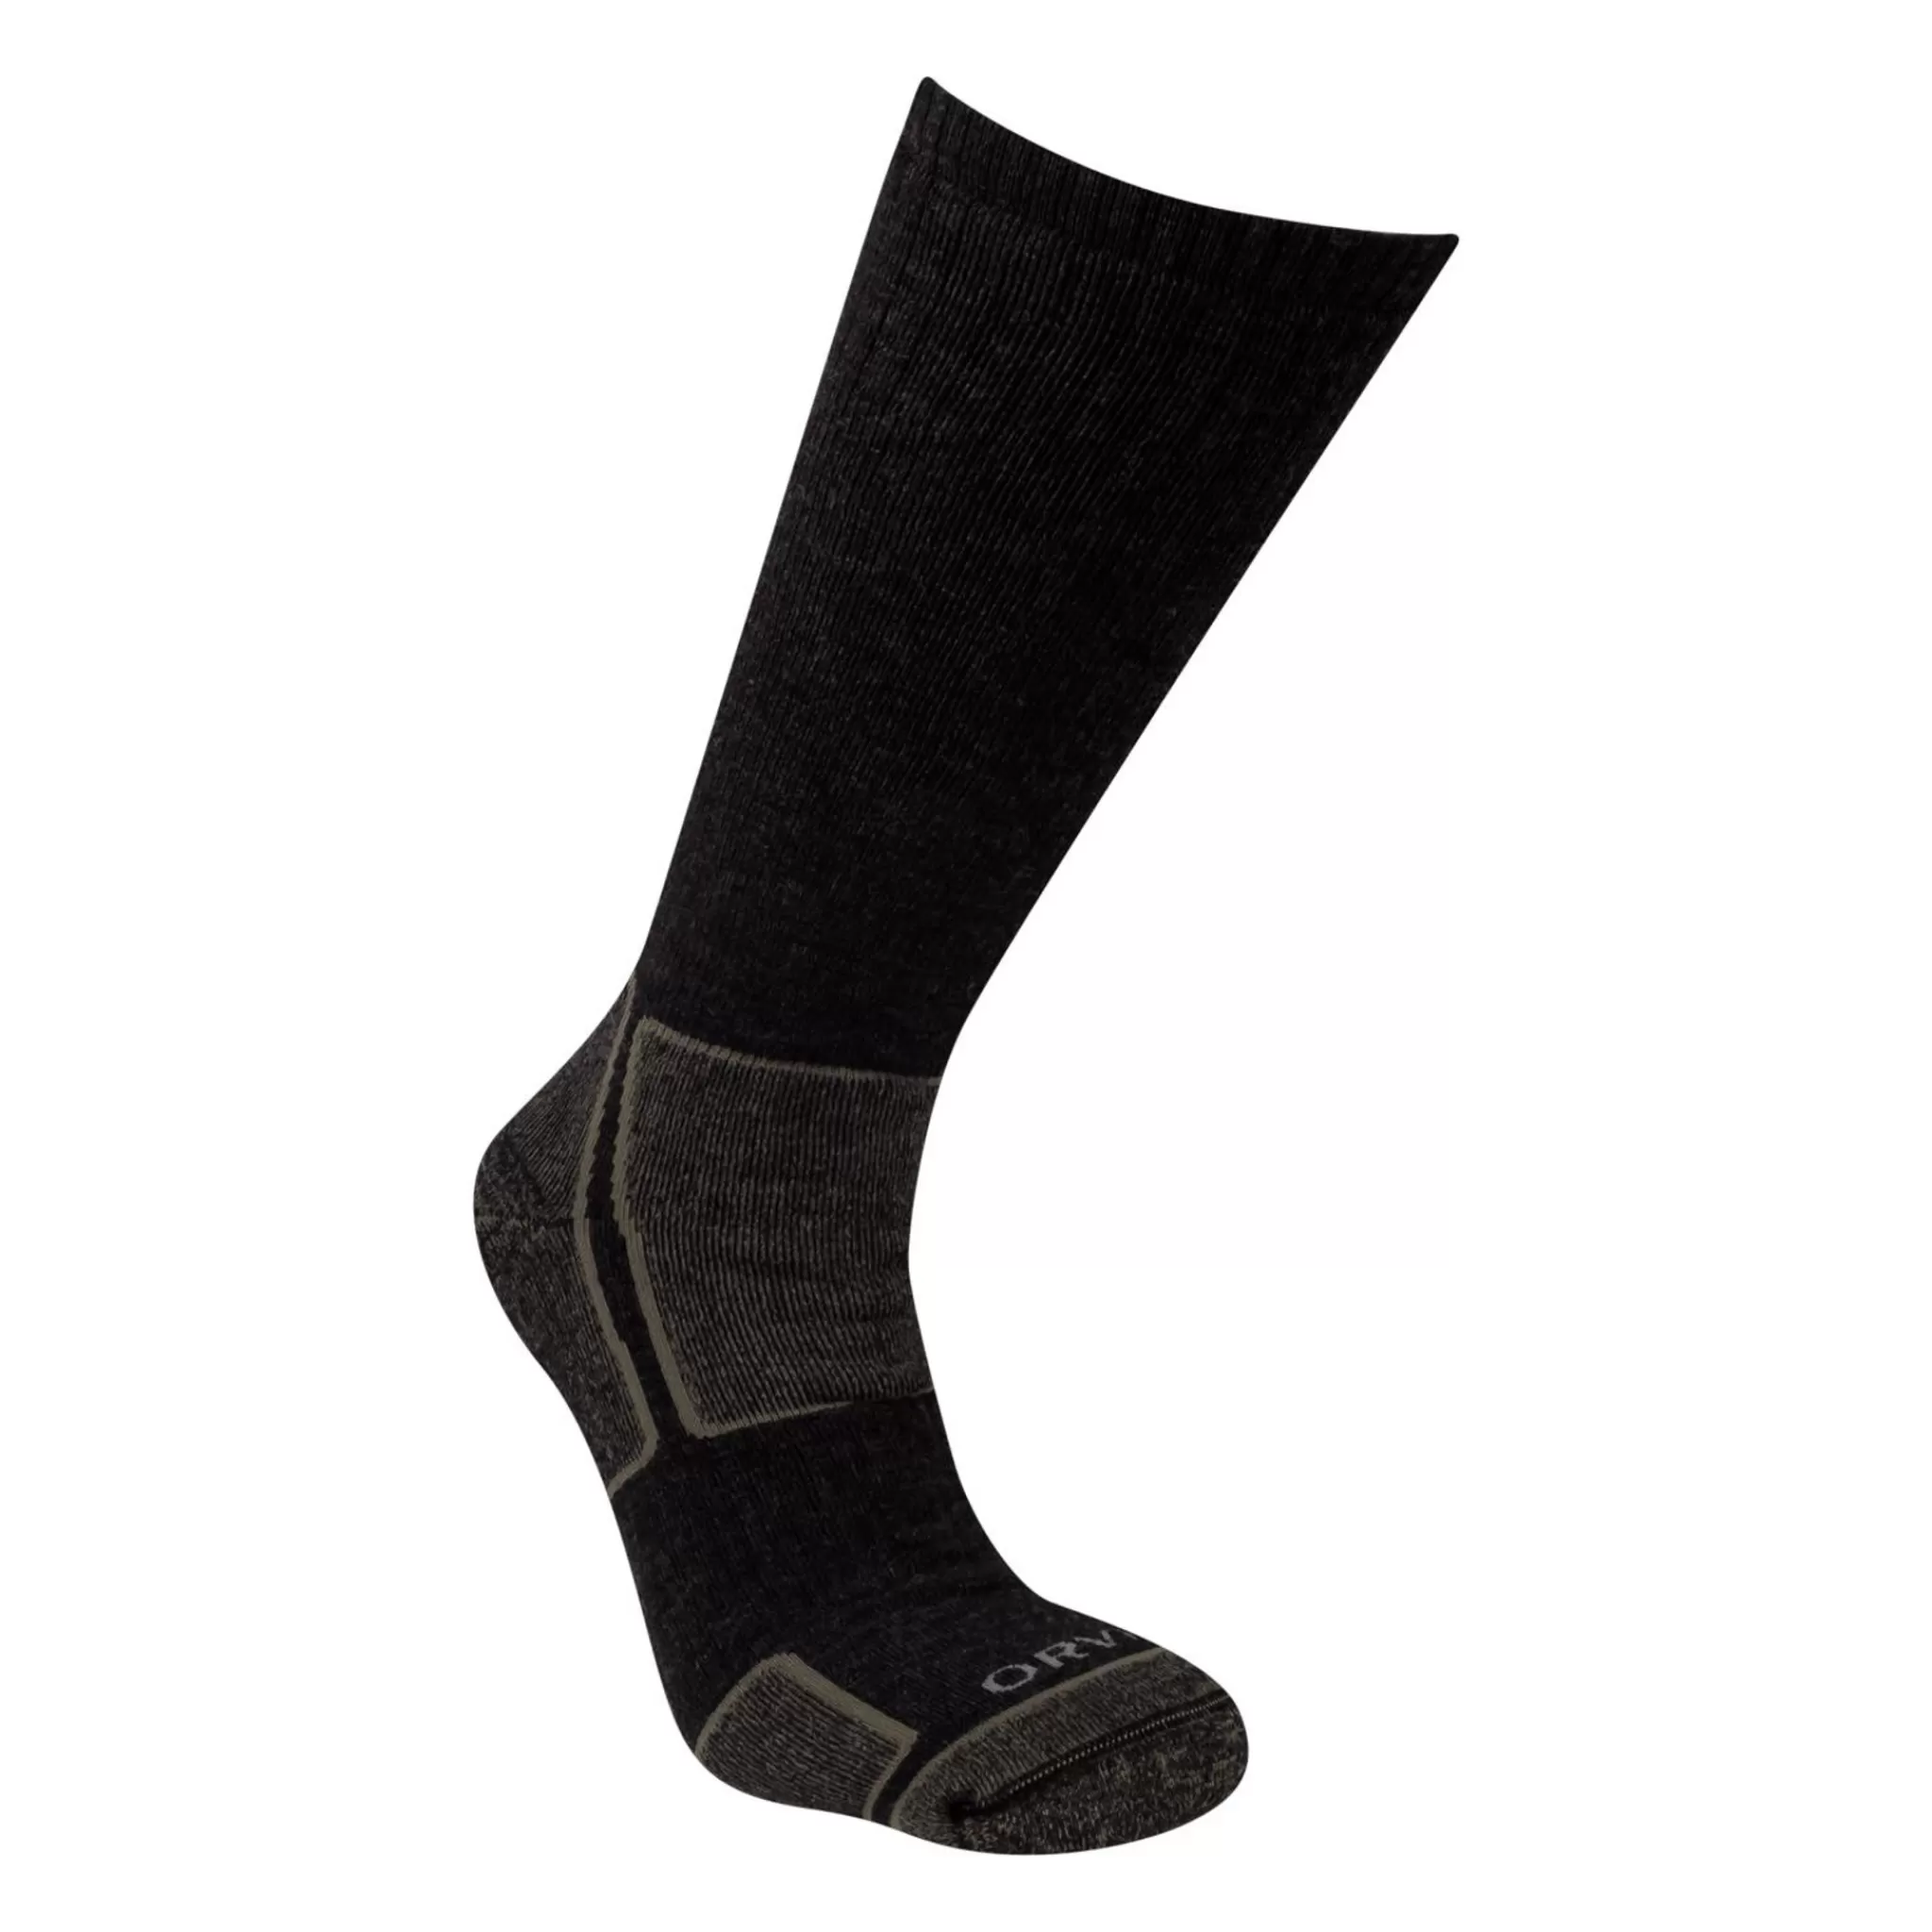 New orvis Heavyweight Otc Wader Socks